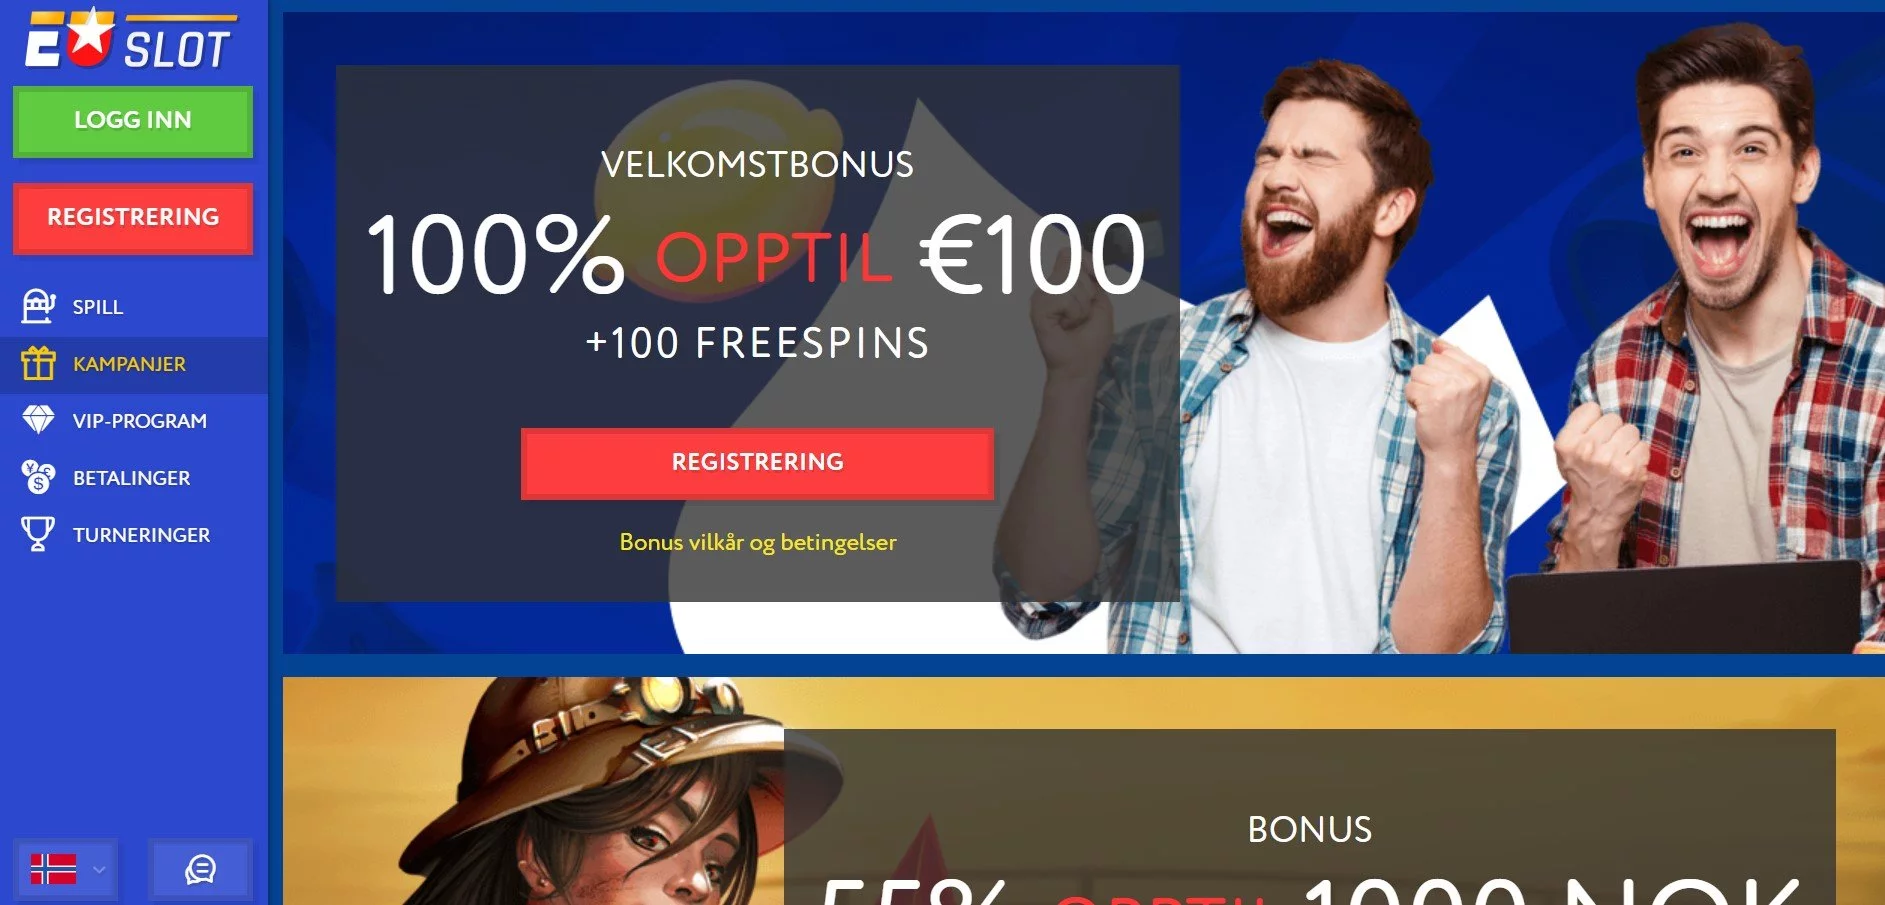 euslot casino kampanjer